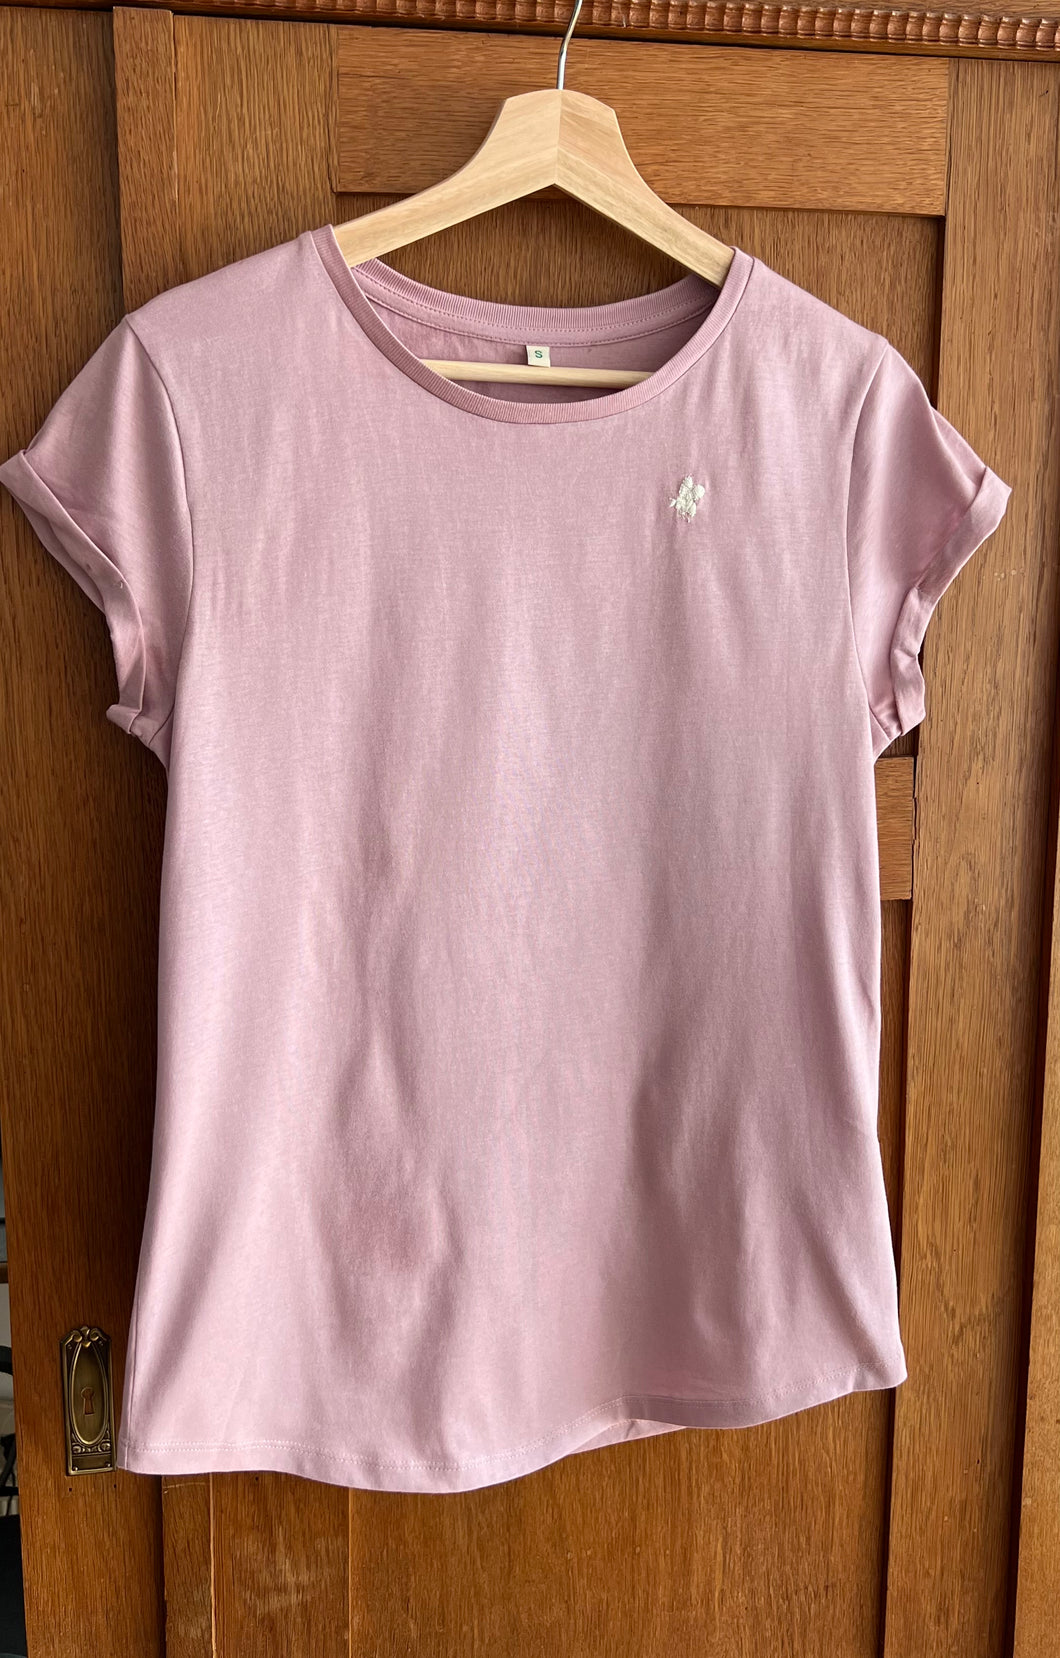 T-Shirt Biene, S, purple rose